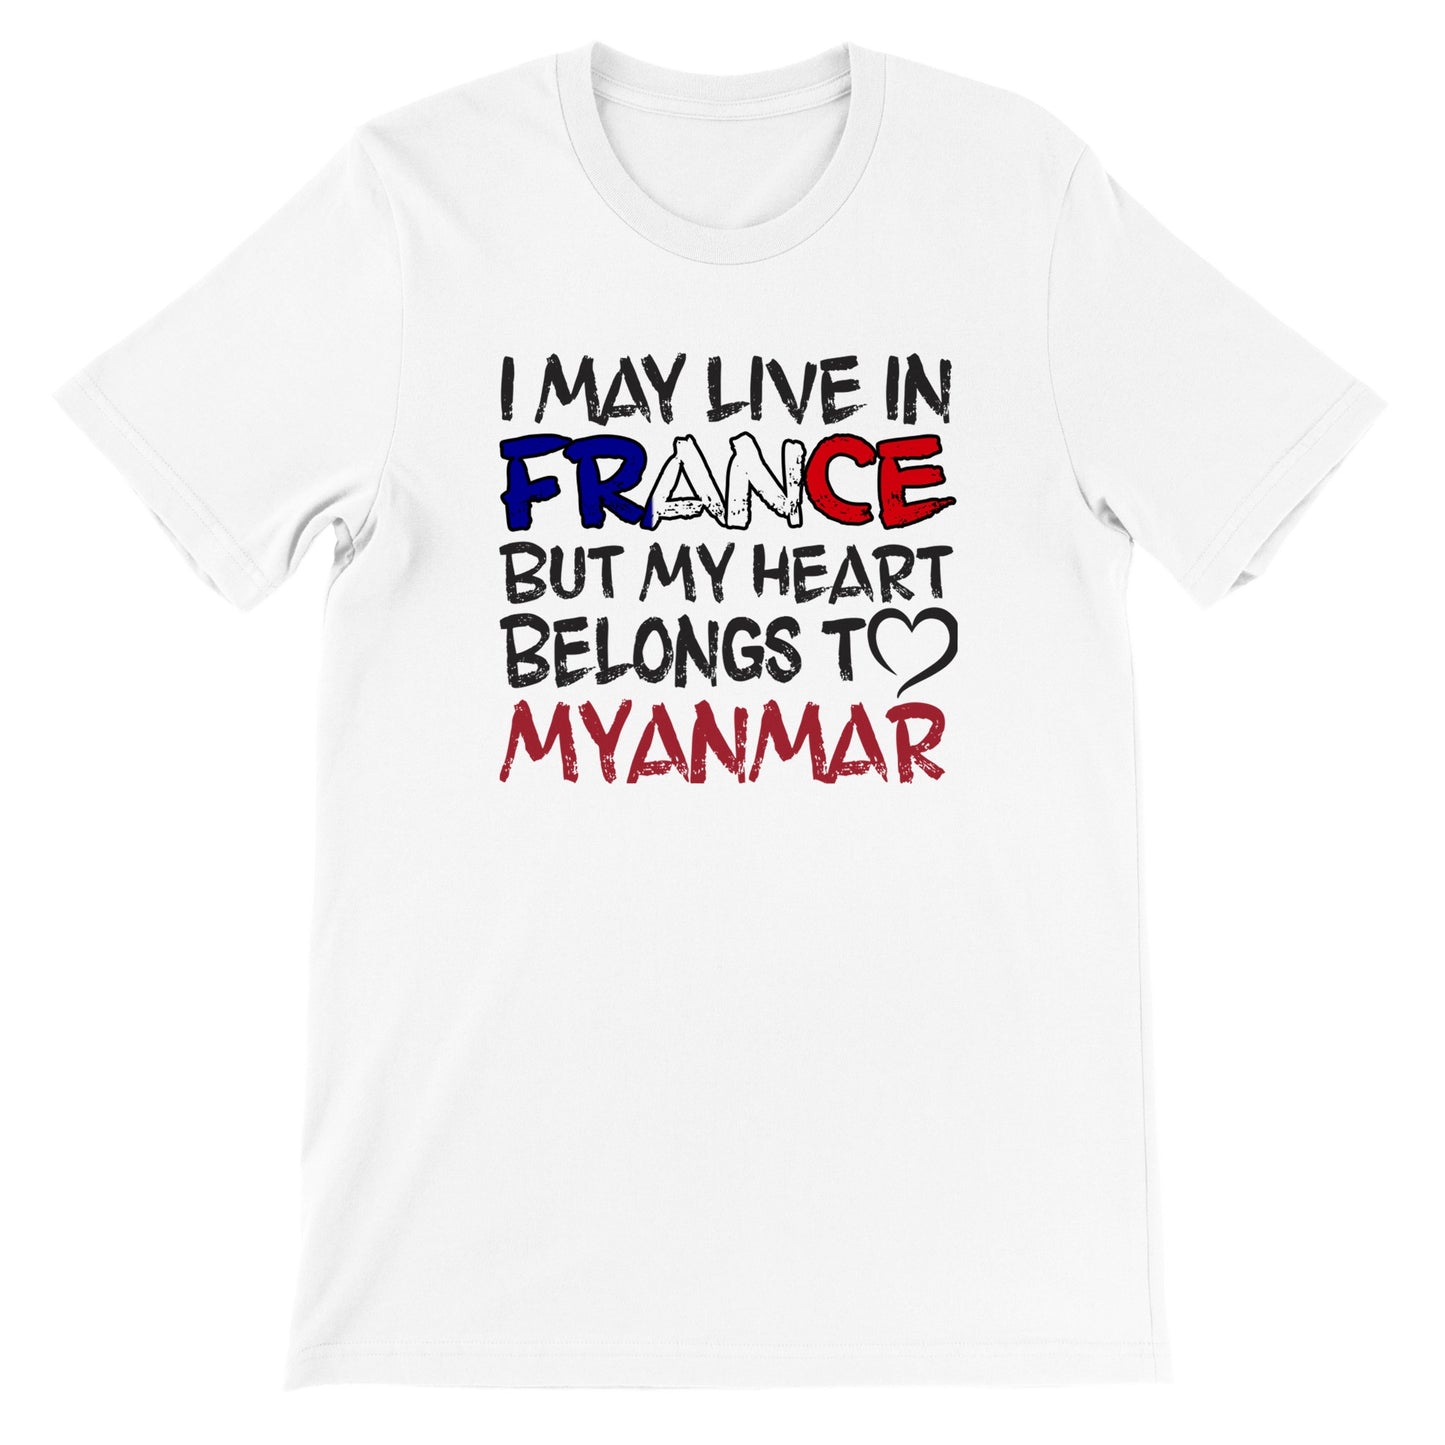 France🇫🇷 Edition - My Heart Belongs to Myanmar